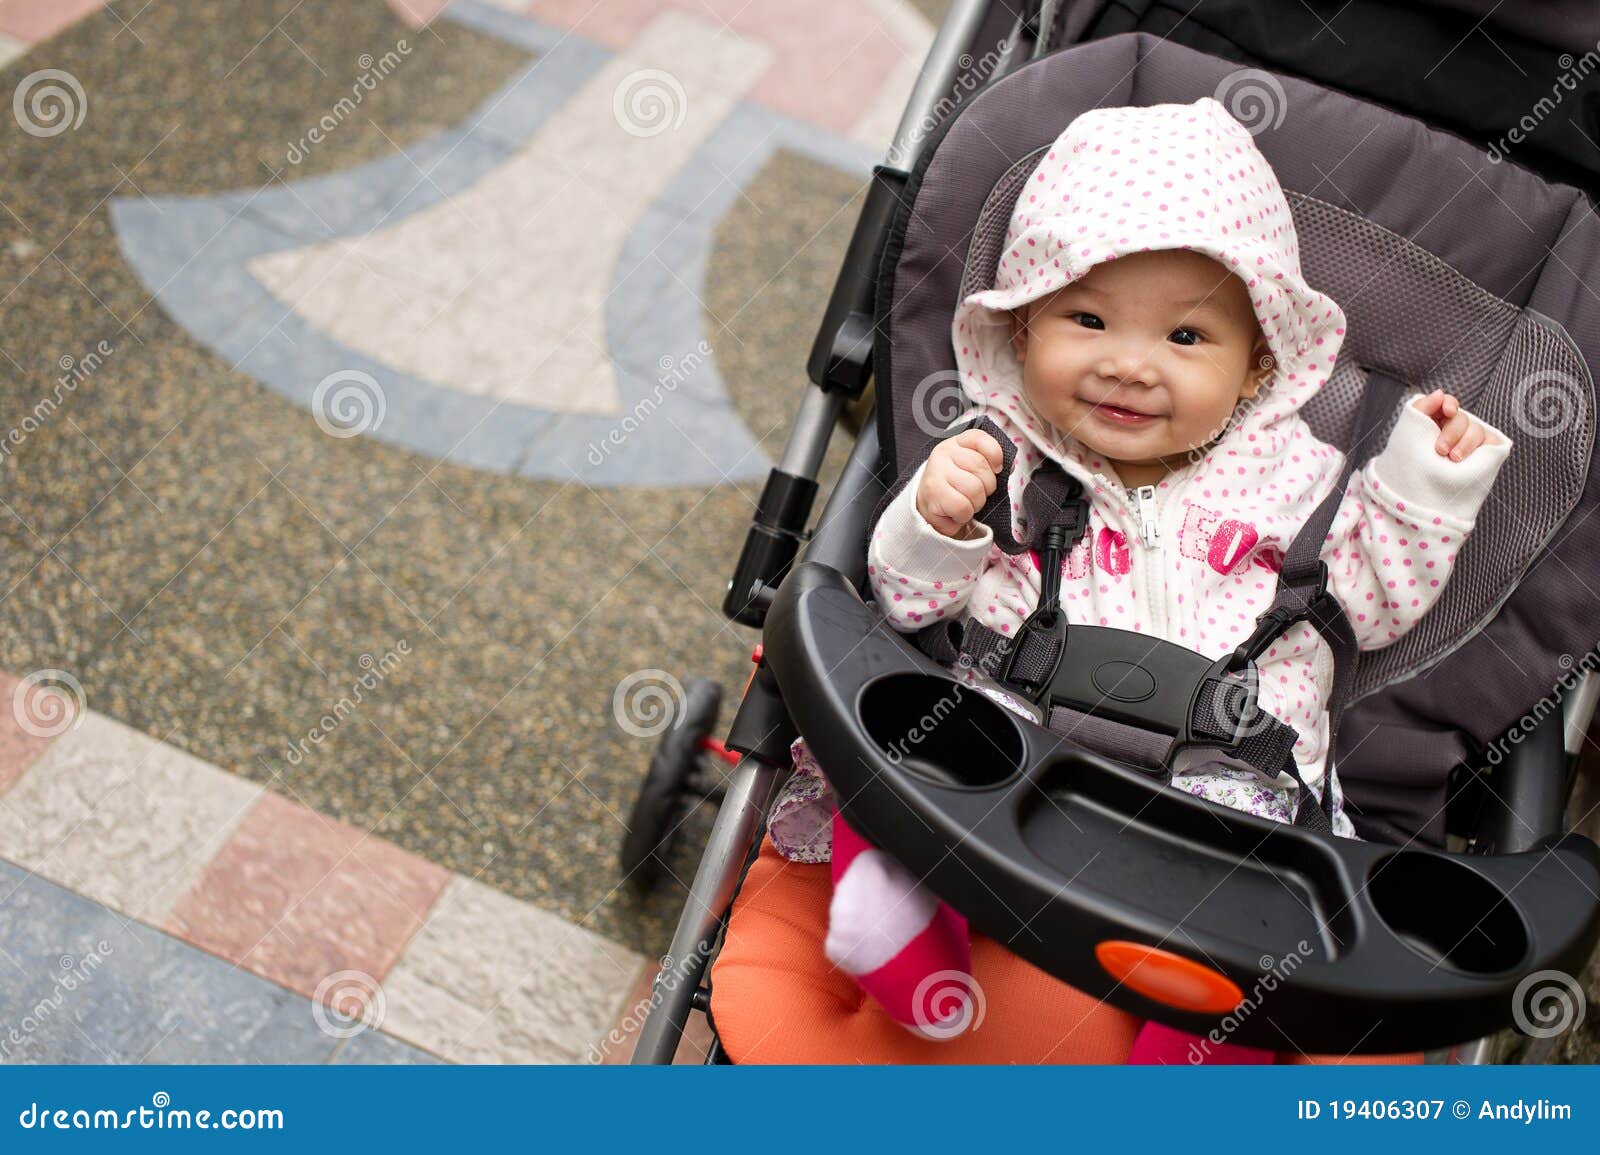 5 month old in stroller